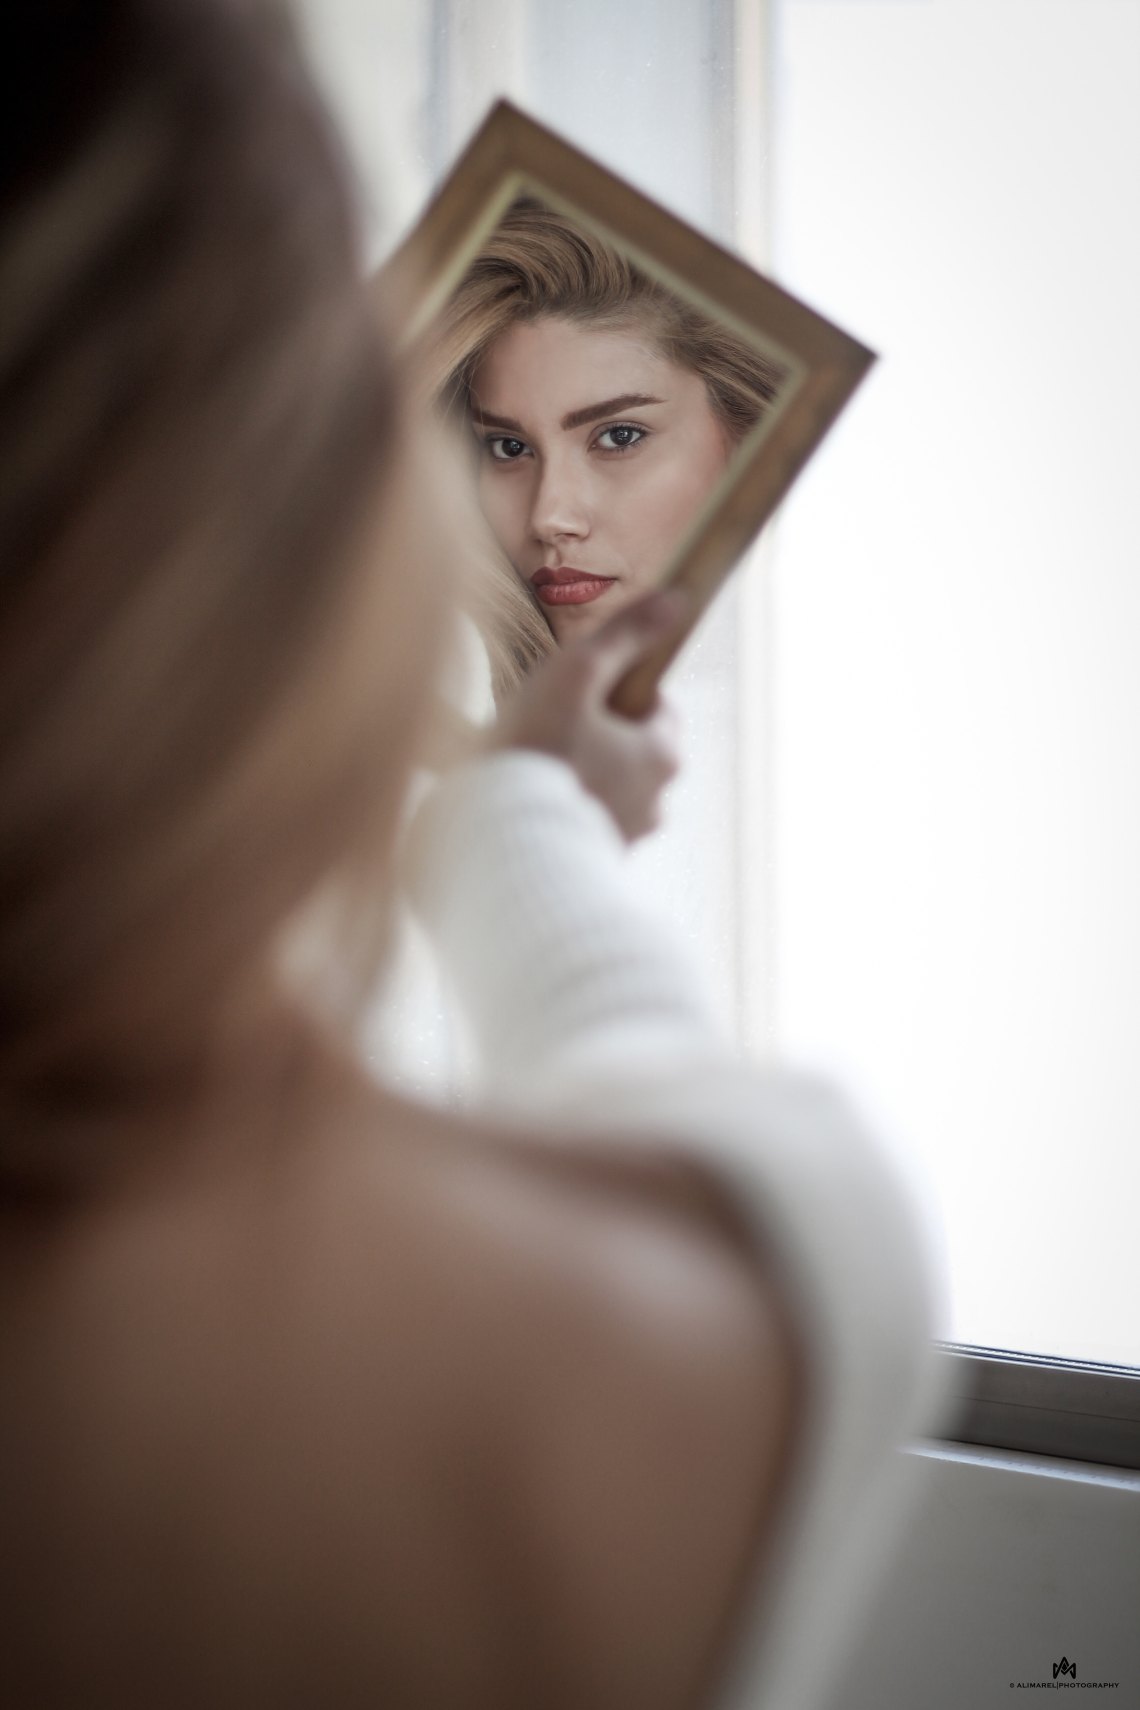 girl holding a mirror